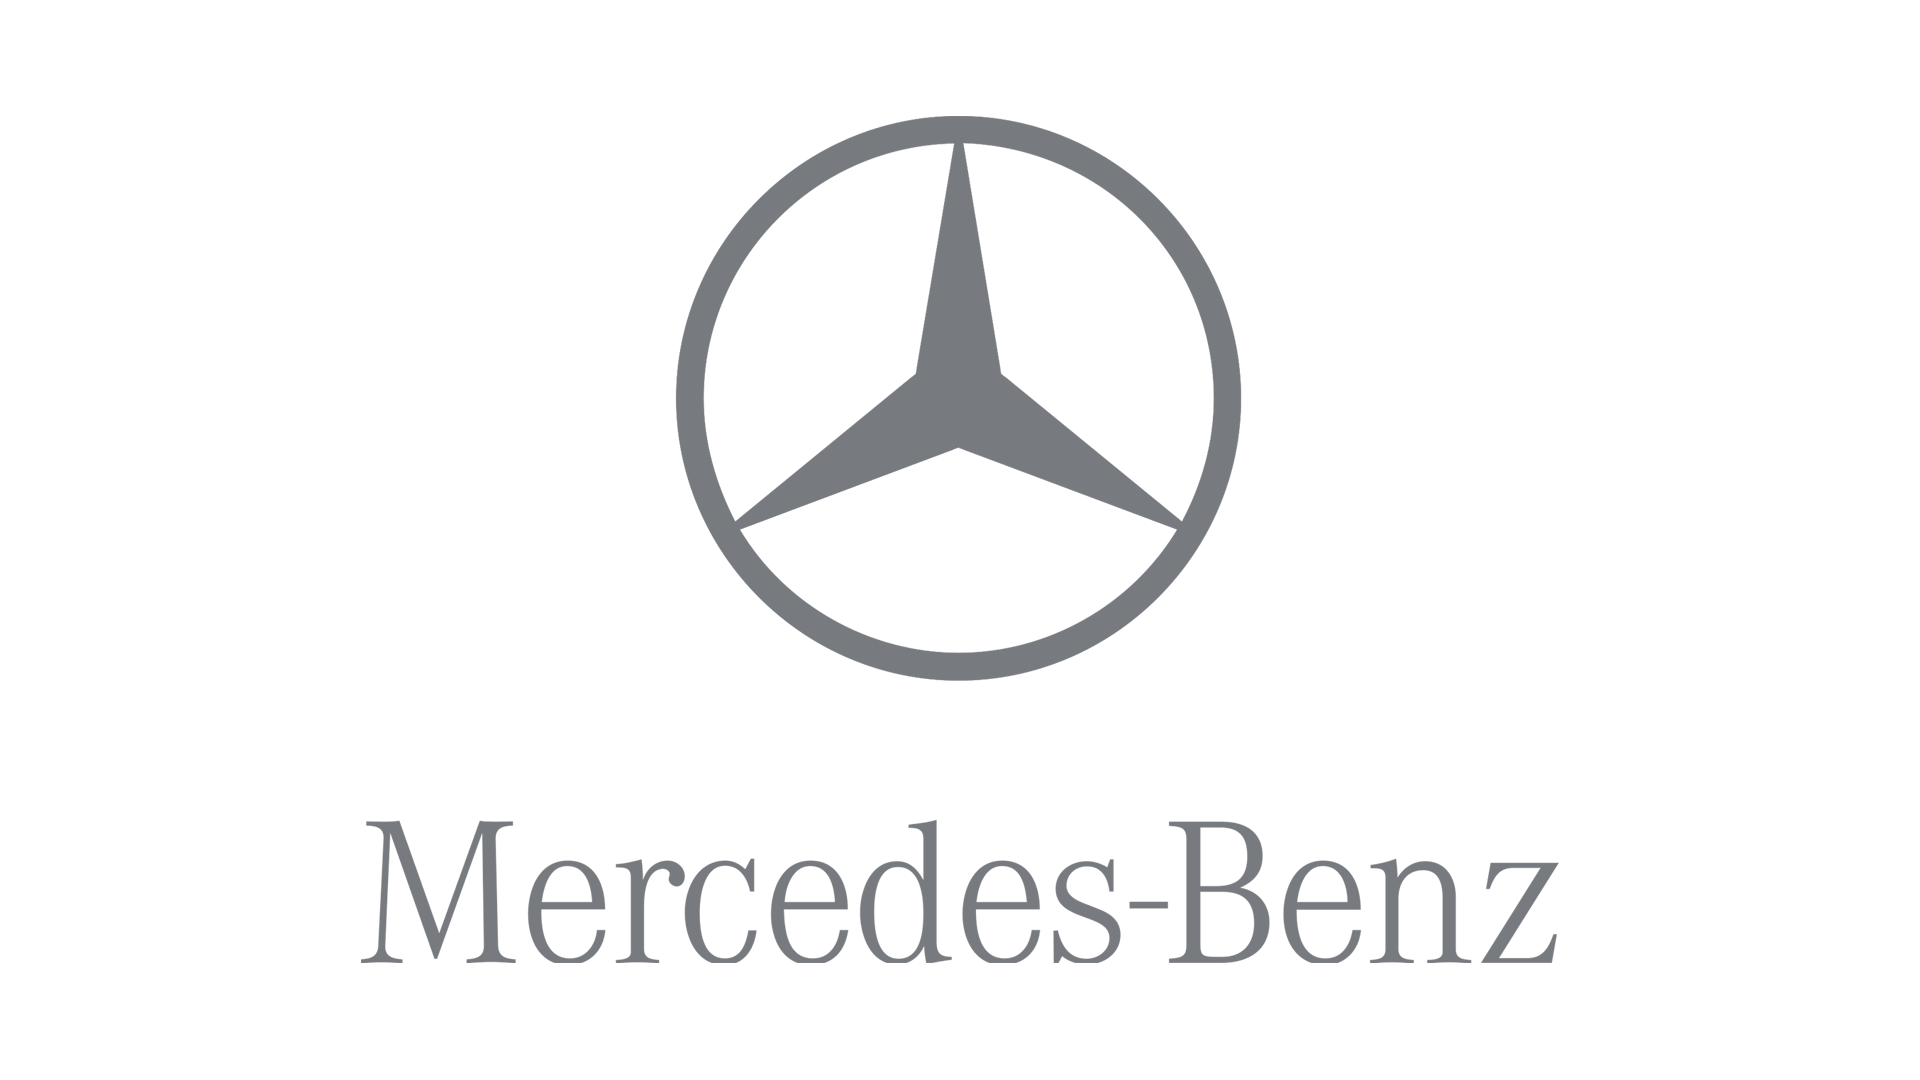 Mercedes-Benz-logo-2009-1920x1080.png